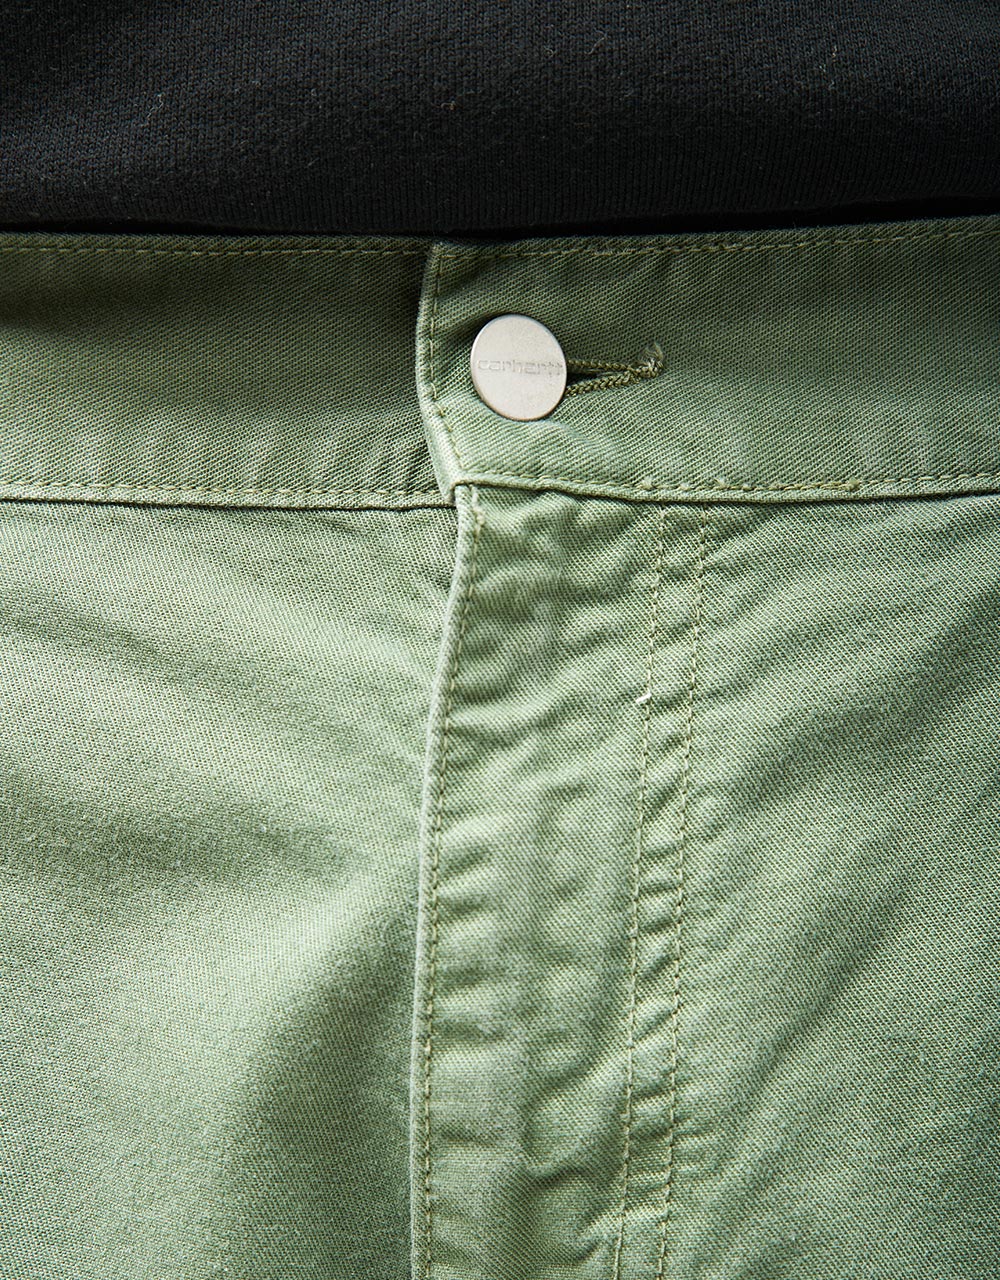 Carhartt WIP Single Knee Pant - Park (Garment Dyed)